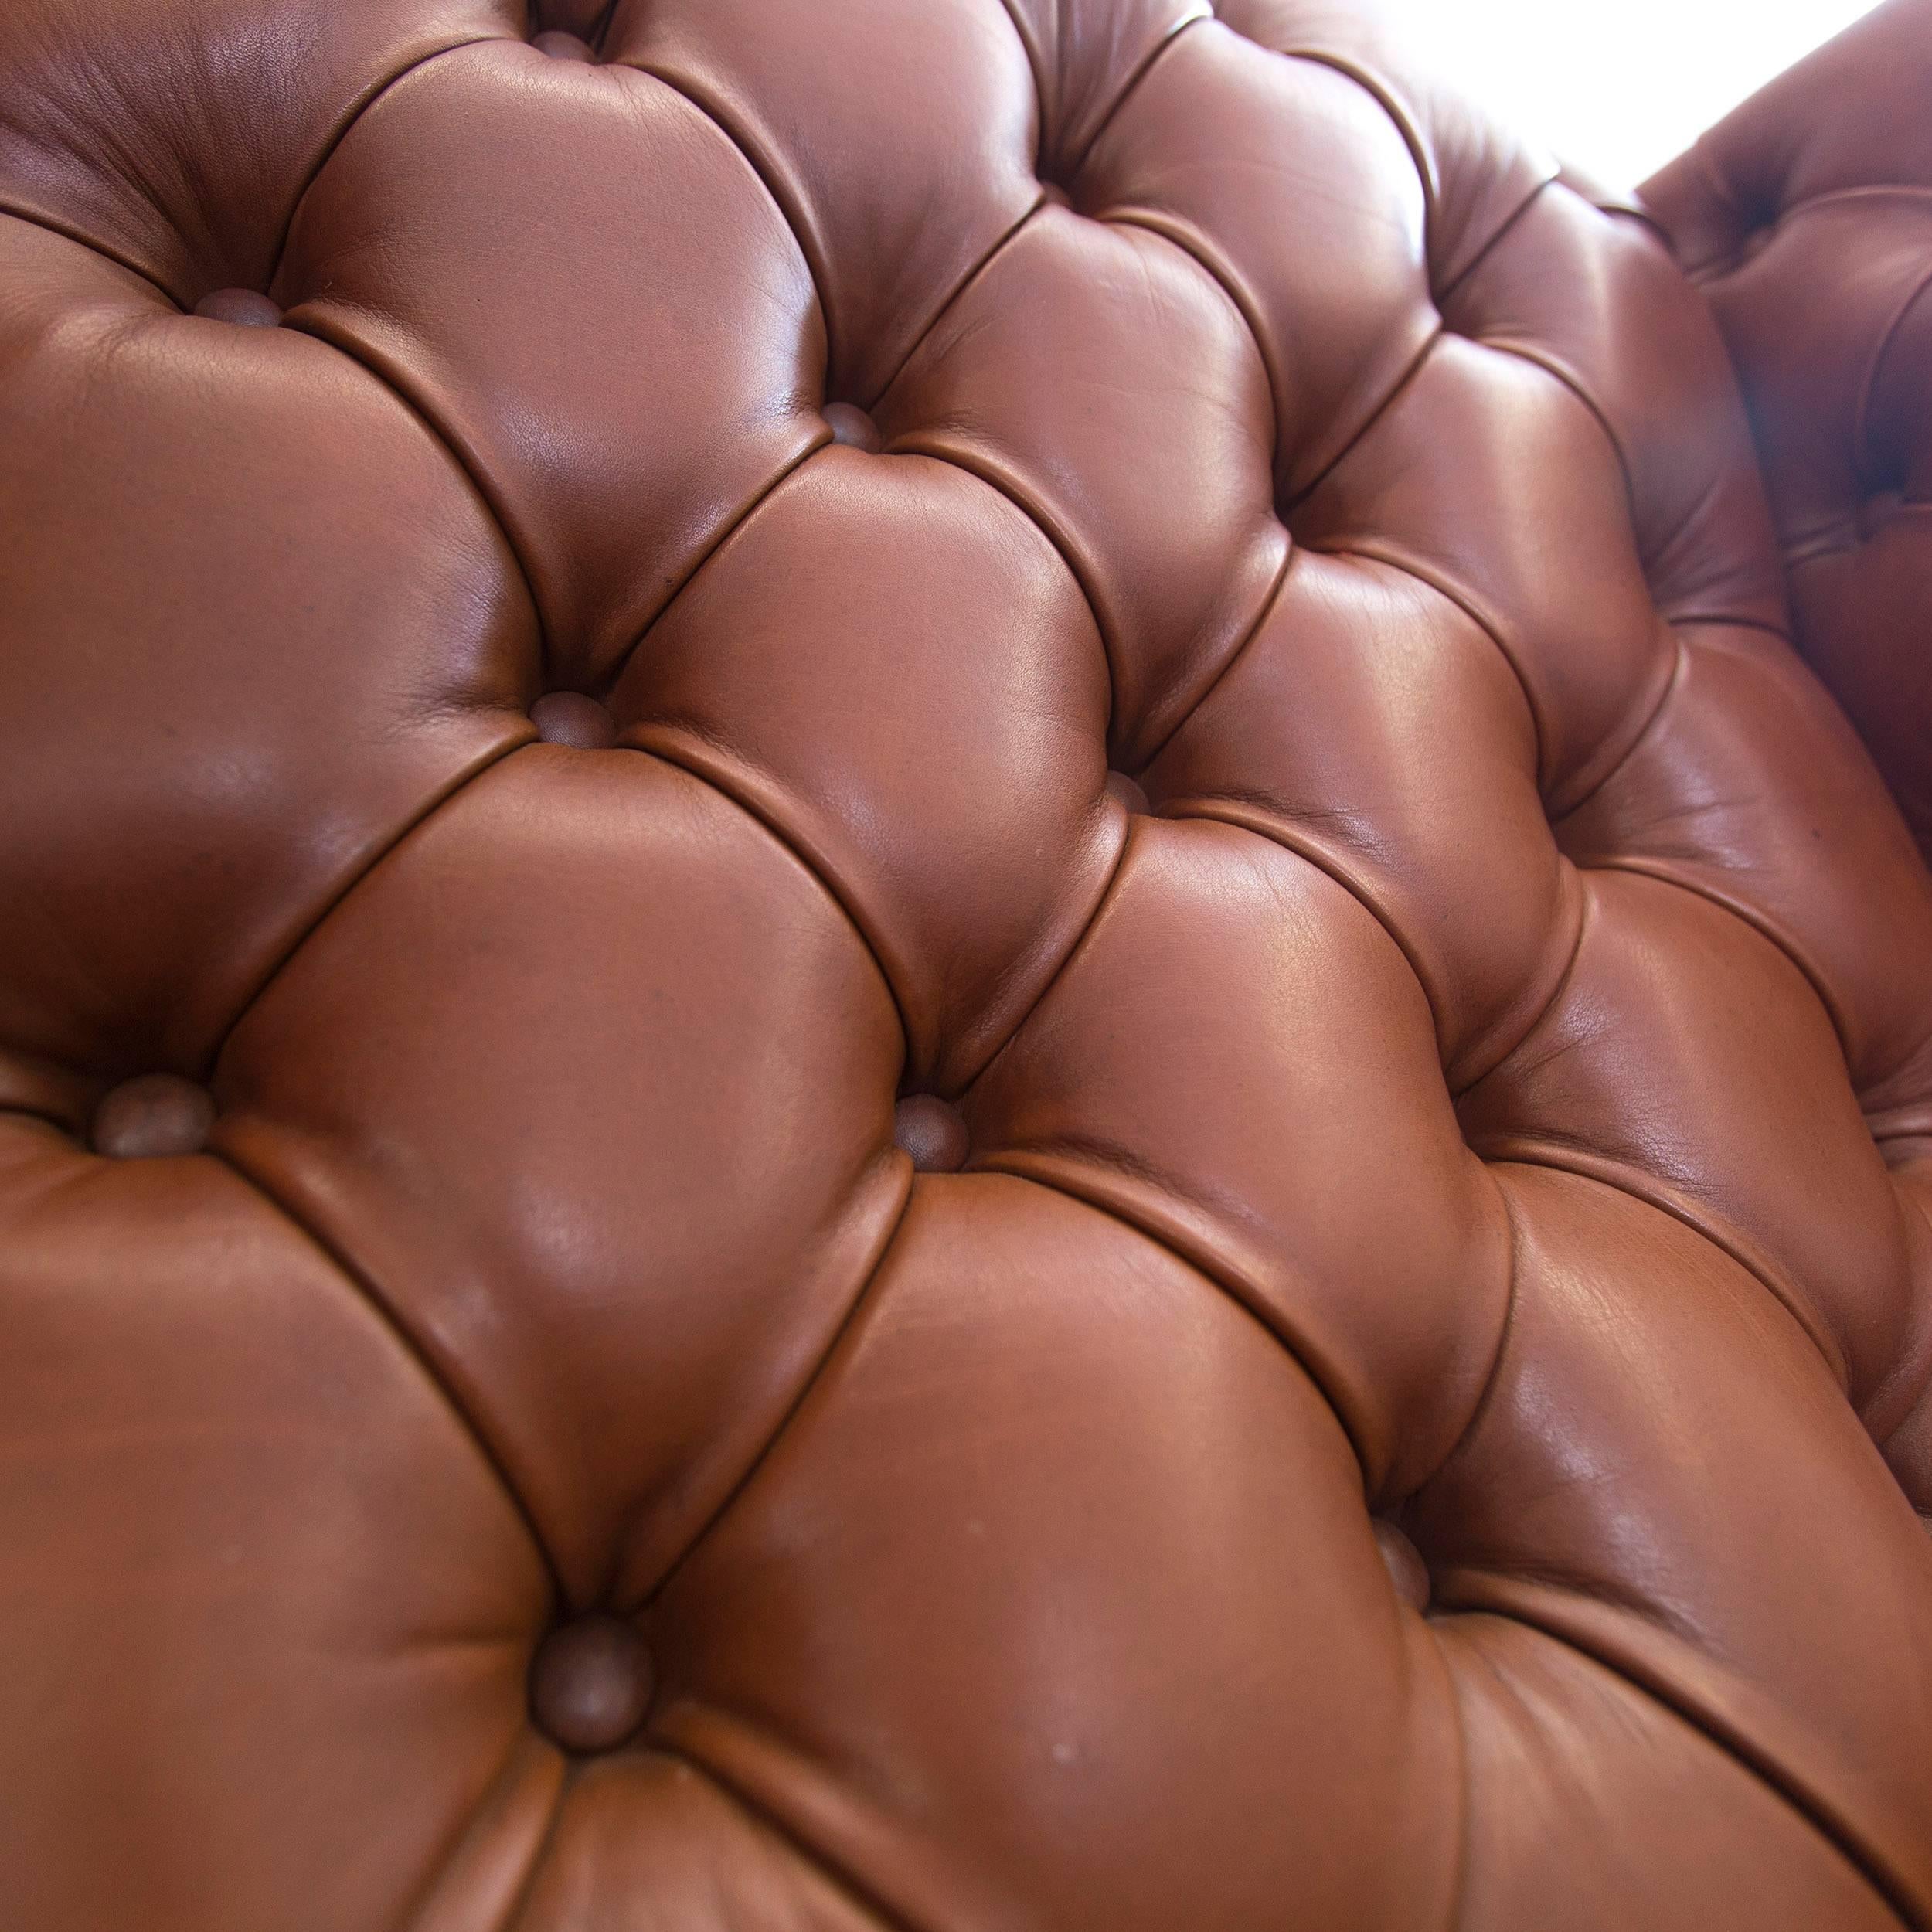 oxblood chesterfield sofa